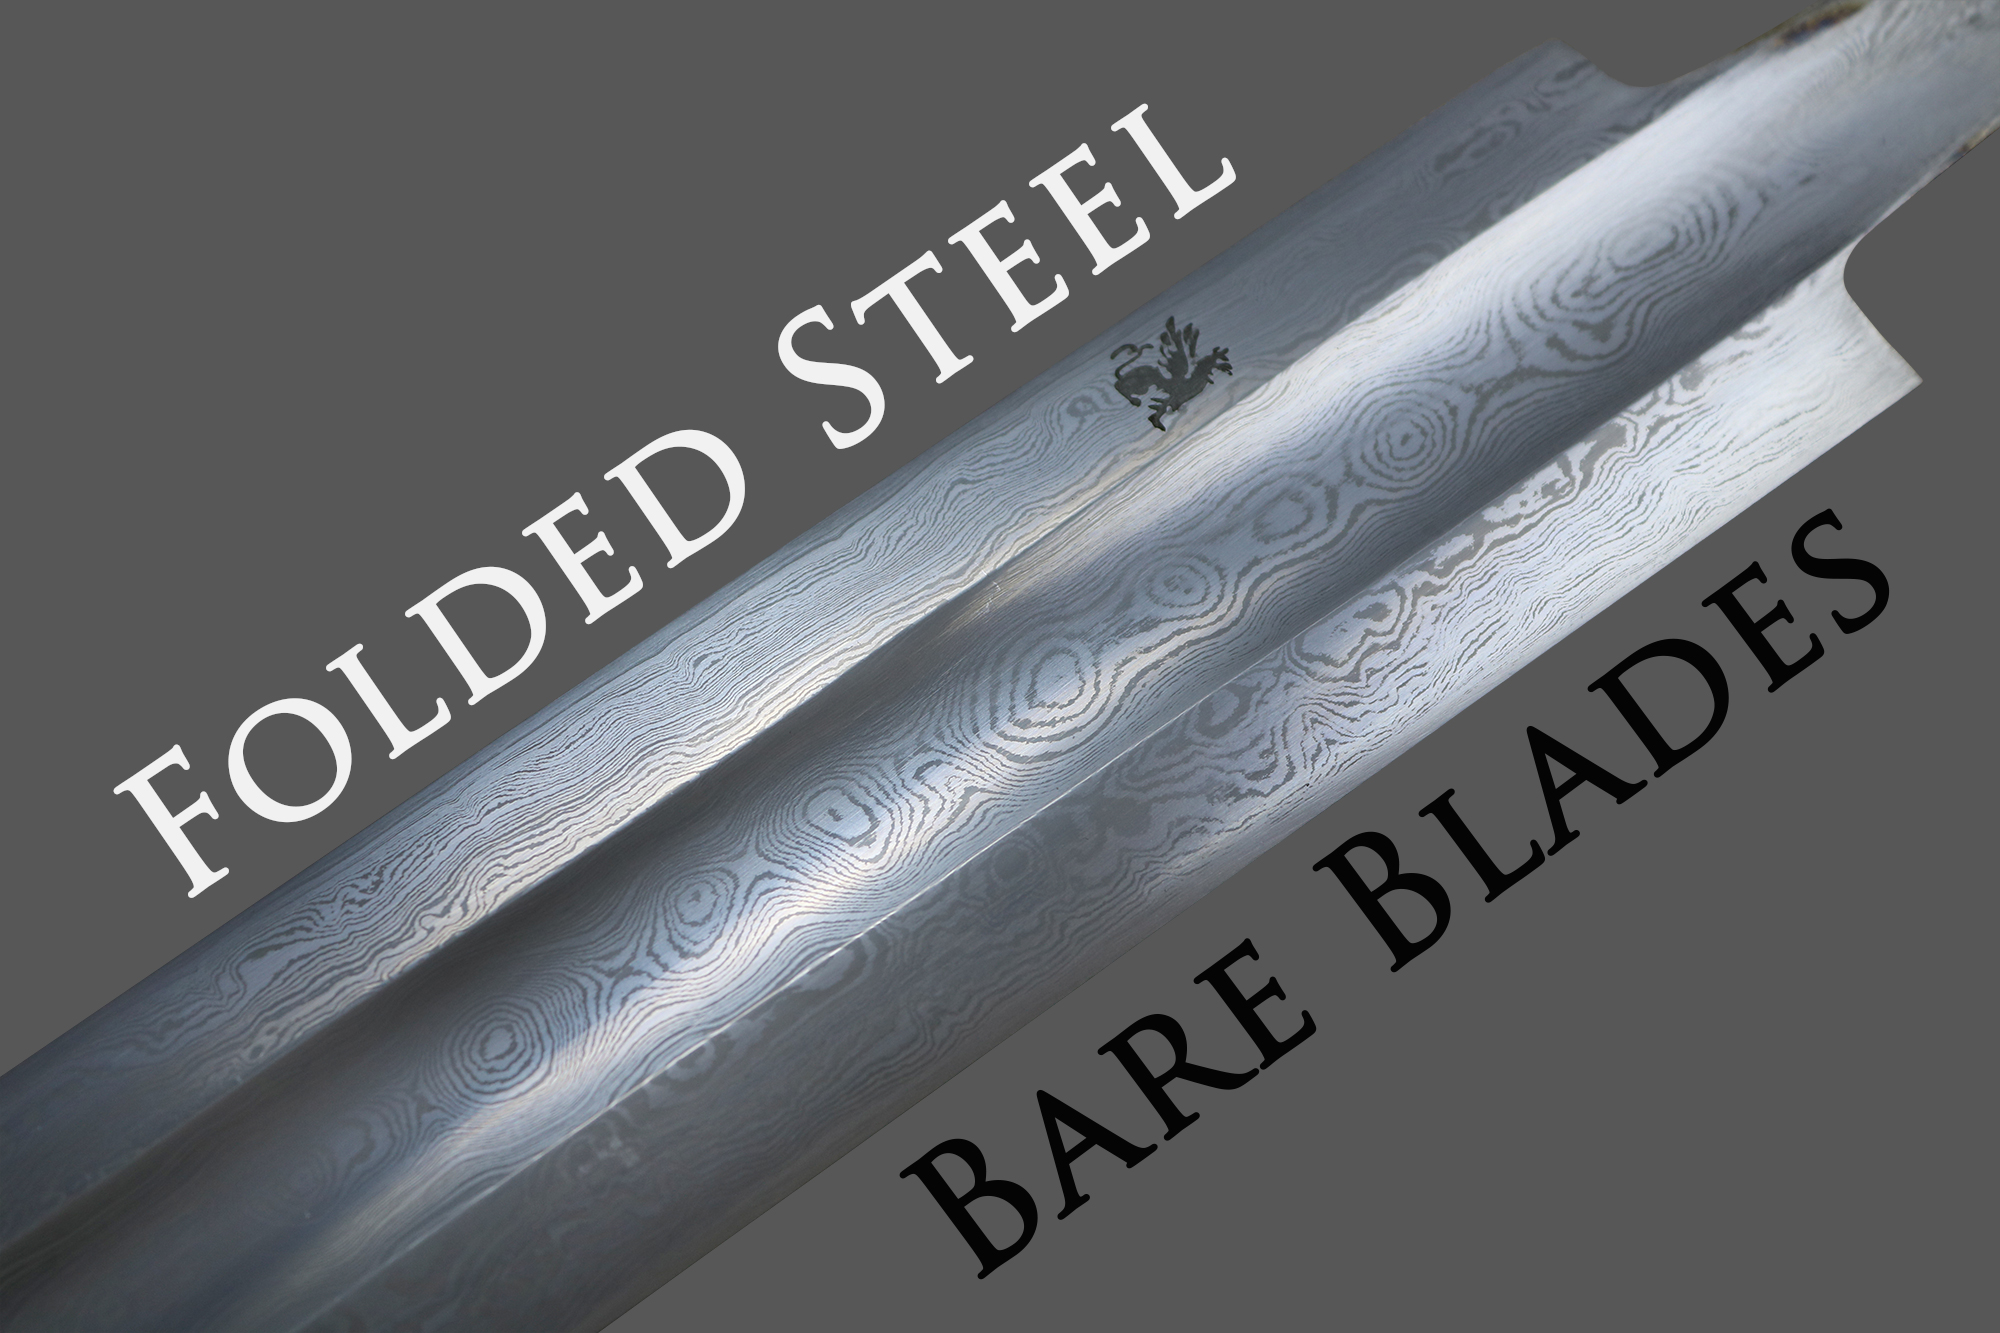 folded-steel-5160-bare-sword-blades-category